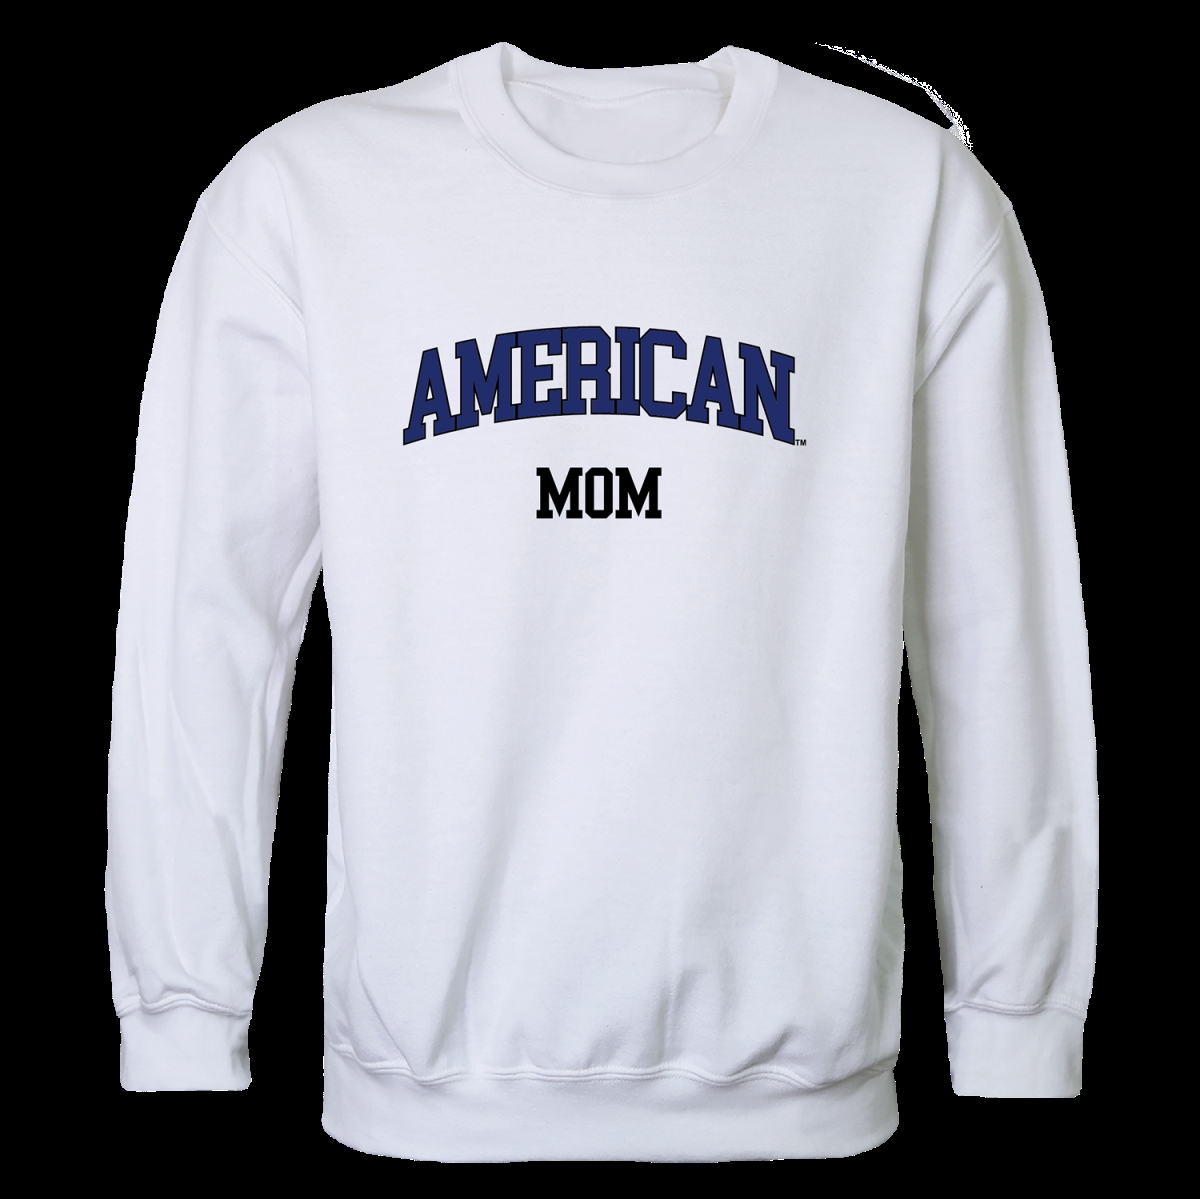 W Republic 564-498-WHT-03 American University Eagles Mom Crewneck Sweatshirt&#44; White - Large